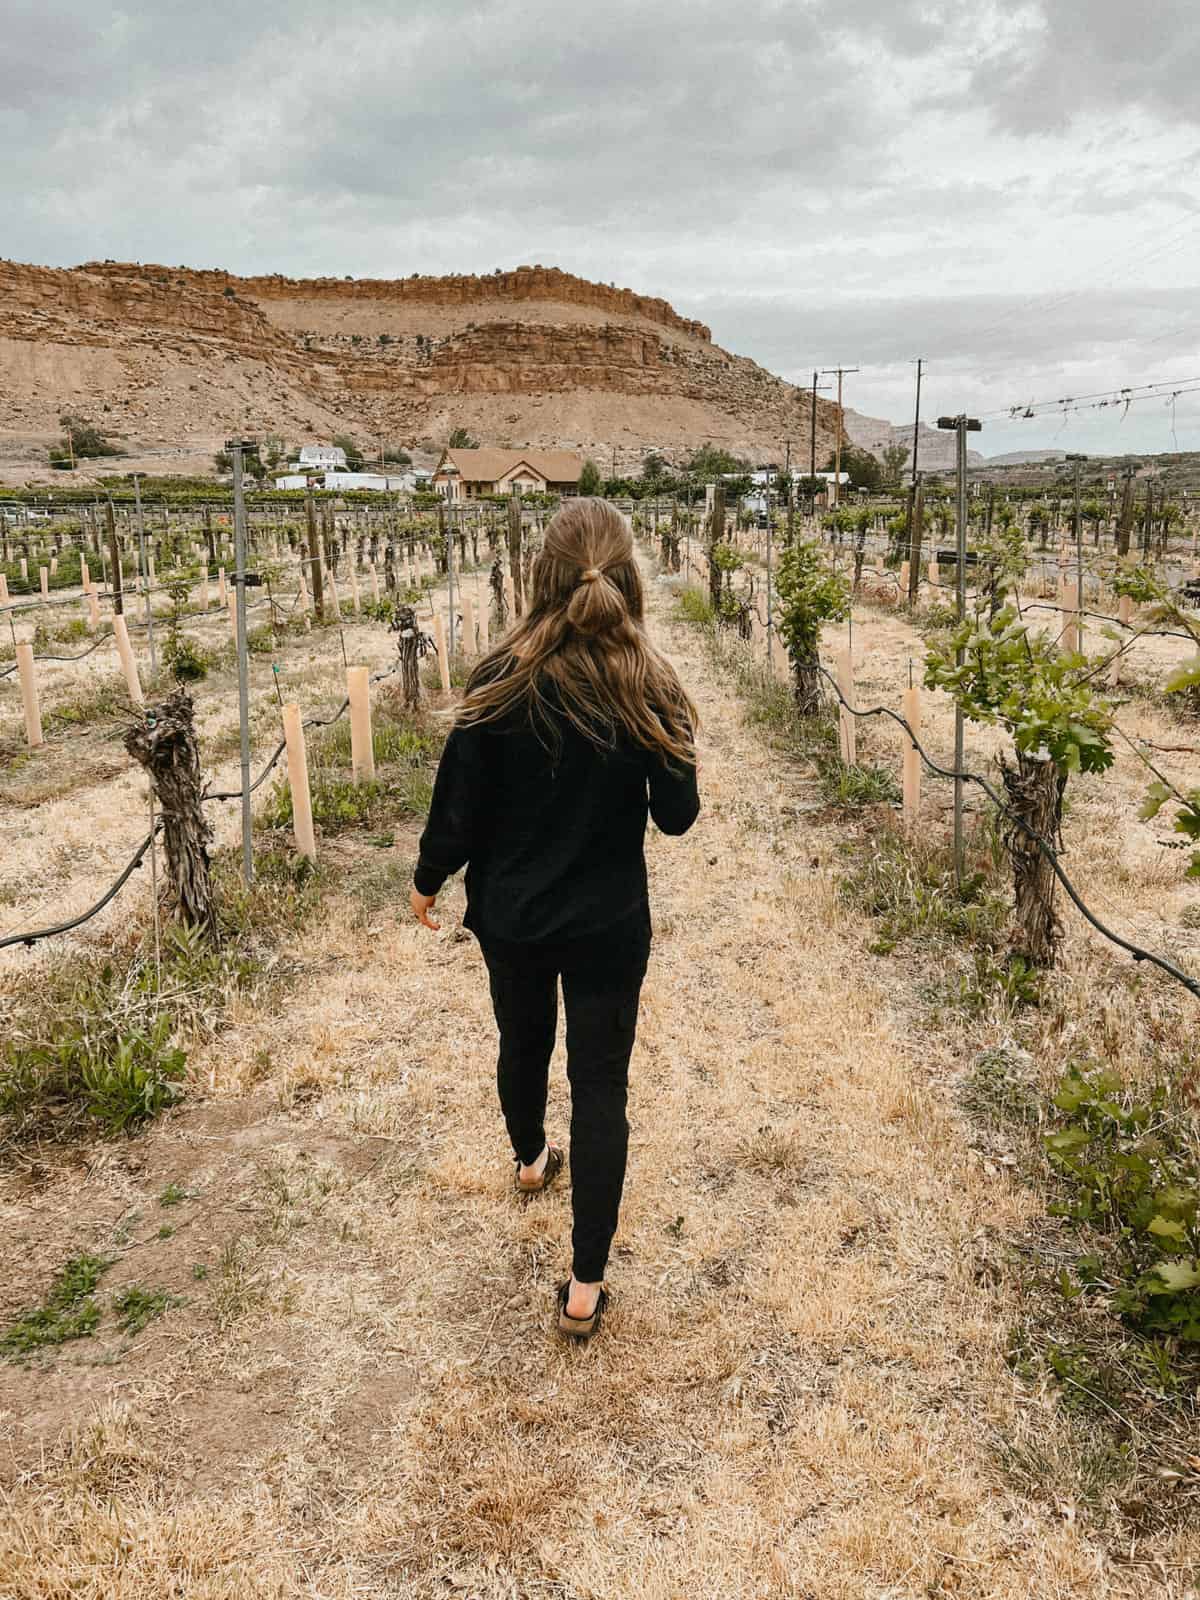 Abby walking through the various vineyard rows.